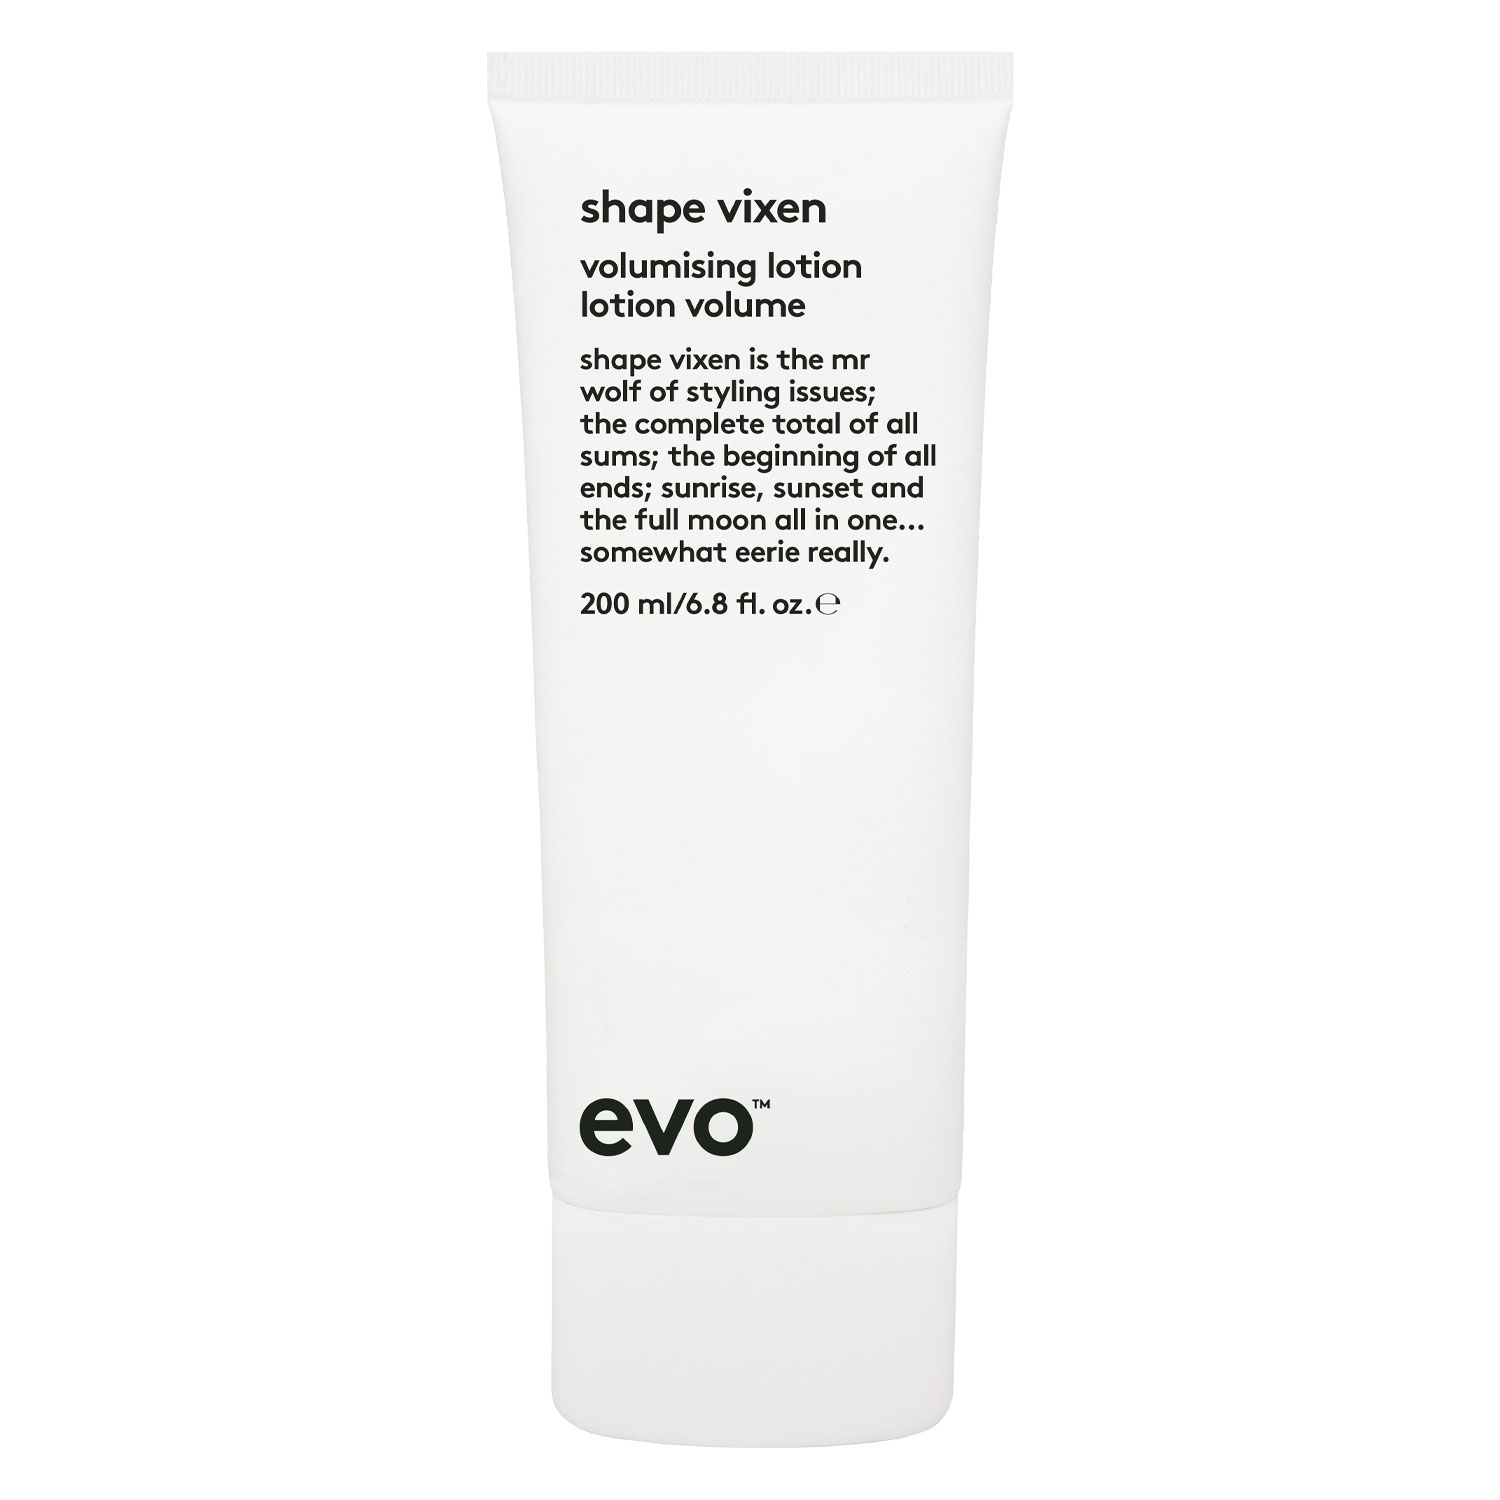 Product image from evo volume - shape vixen volumising lotion